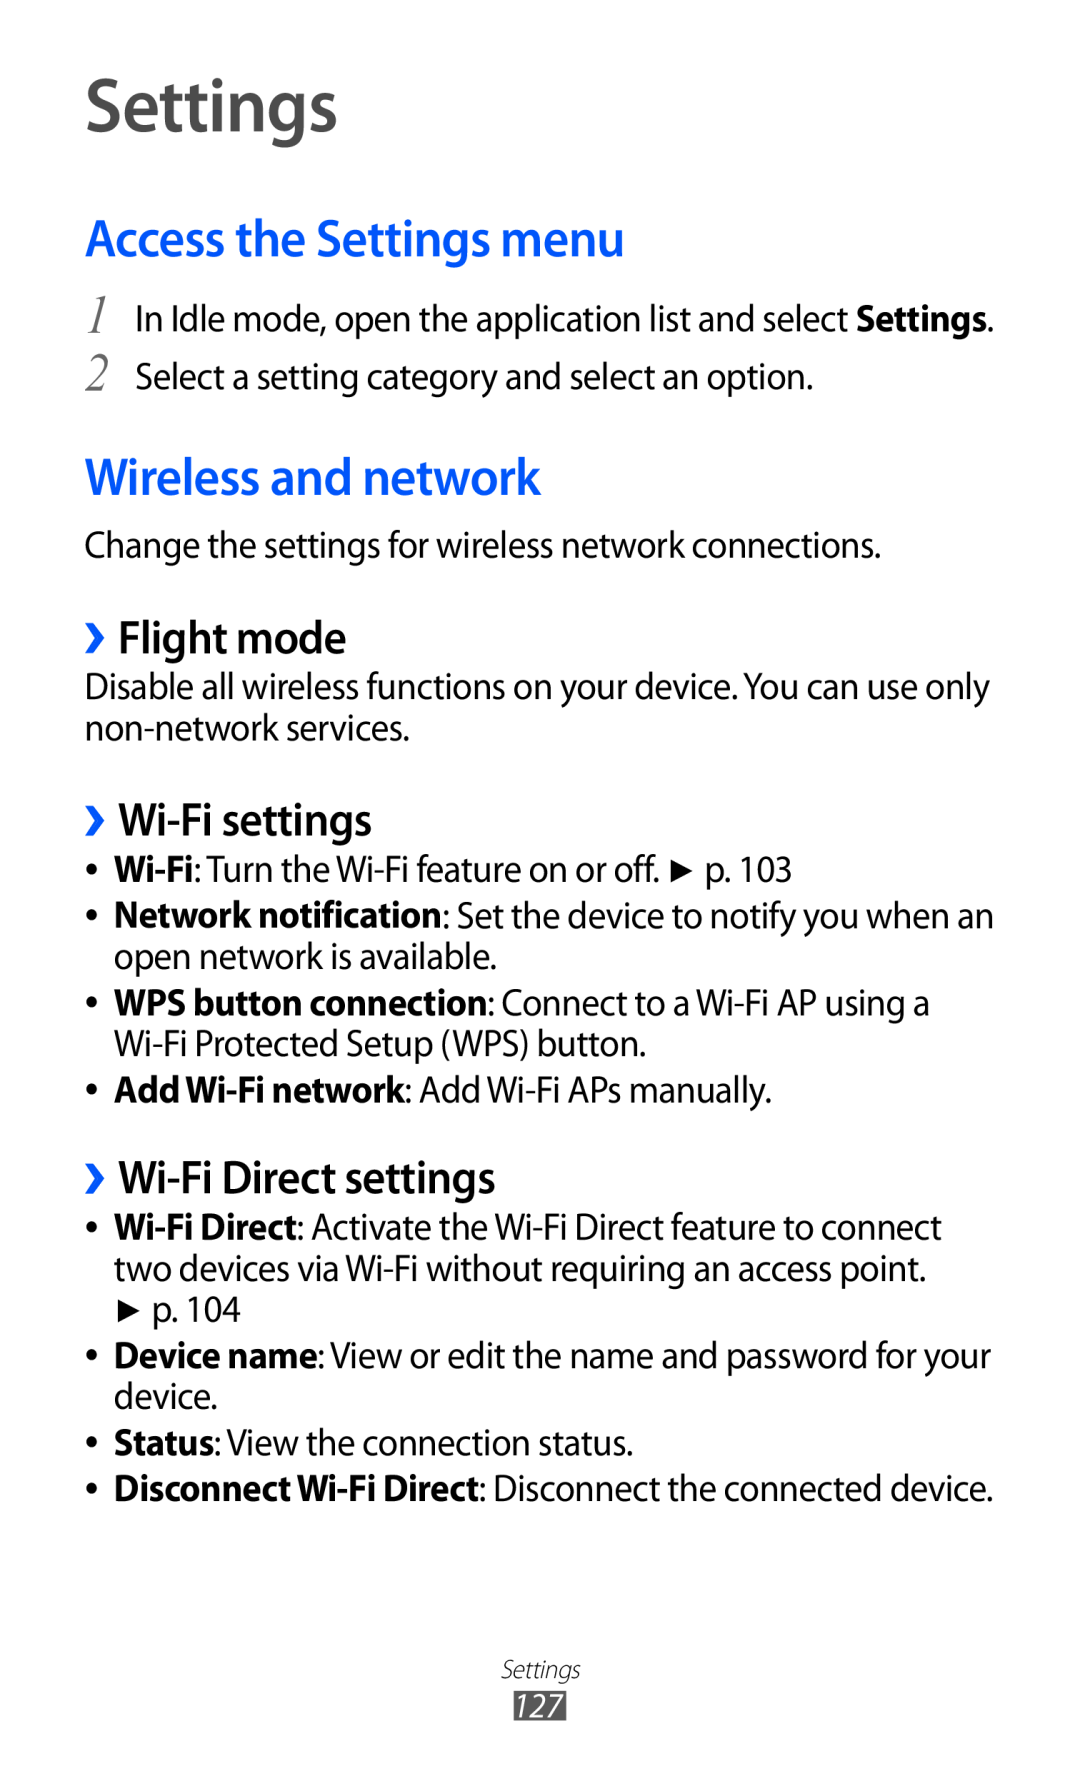 Samsung GT-I9070 user manual Access the Settings menu, Wireless and network, ››Flight mode, ››Wi-Fi settings 